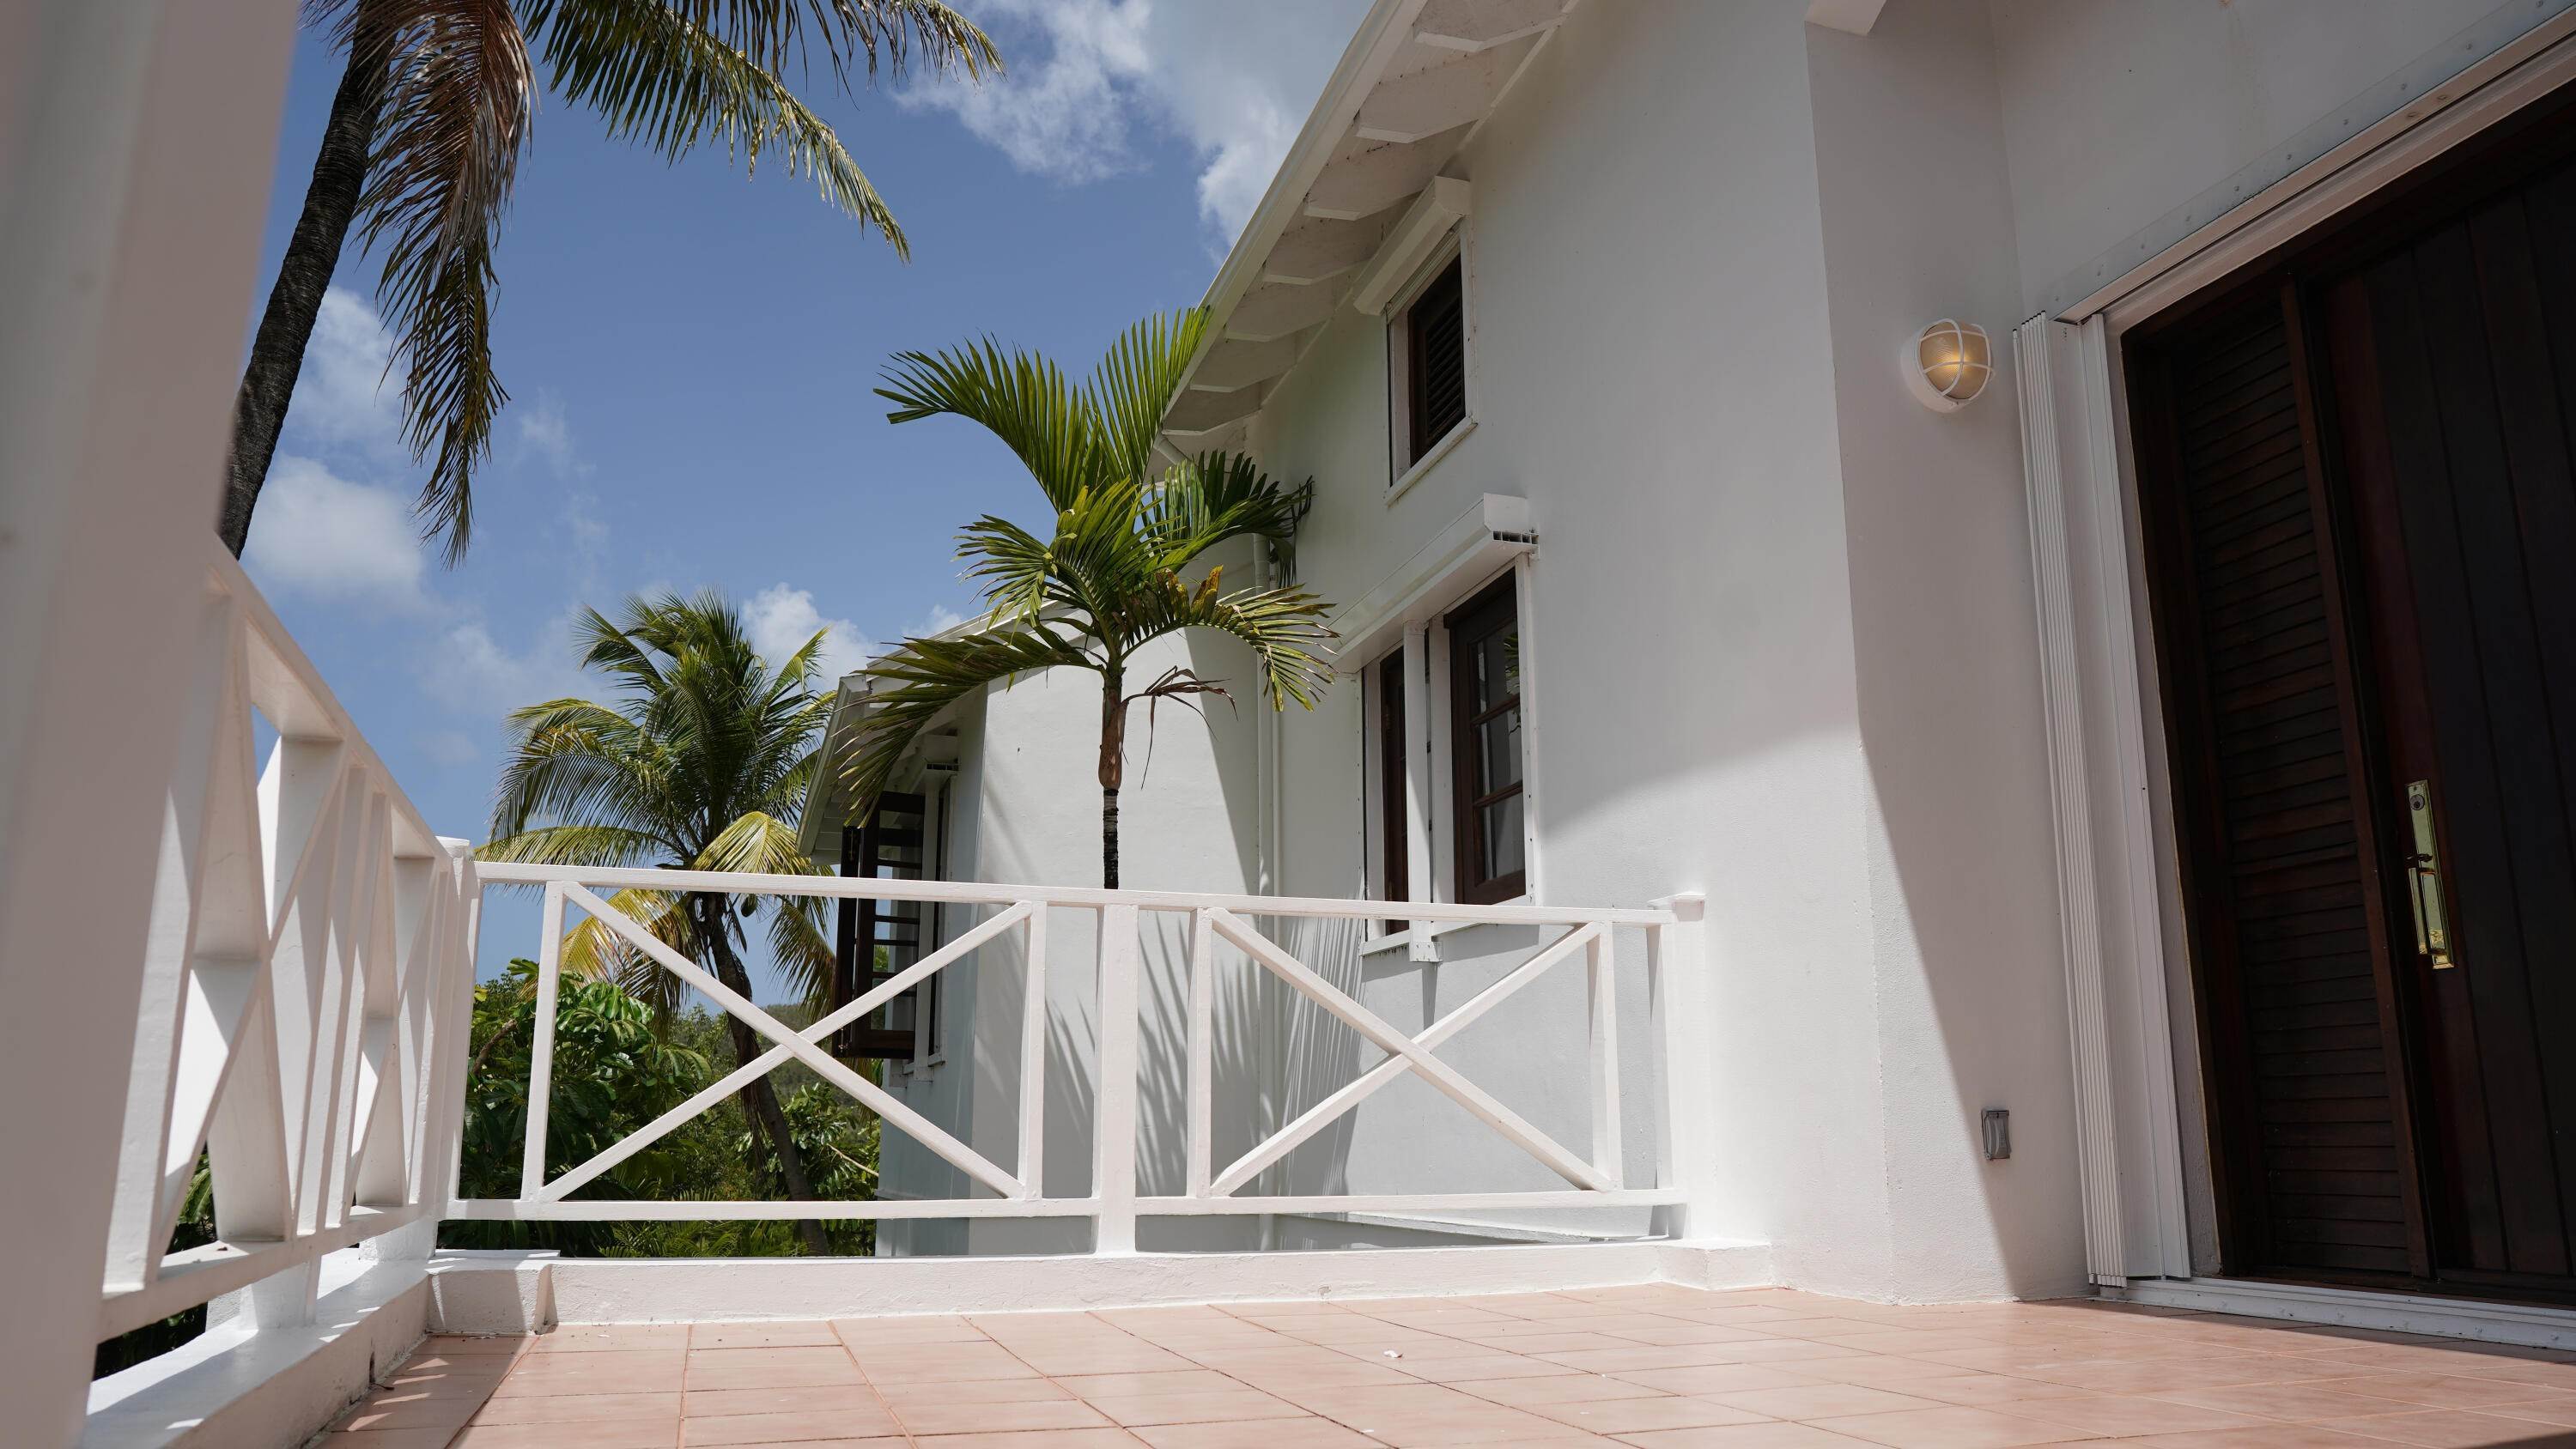 3. Condominiums at Saman 402 Fountain NA St Croix, Virgin Islands 00840 United States Virgin Islands